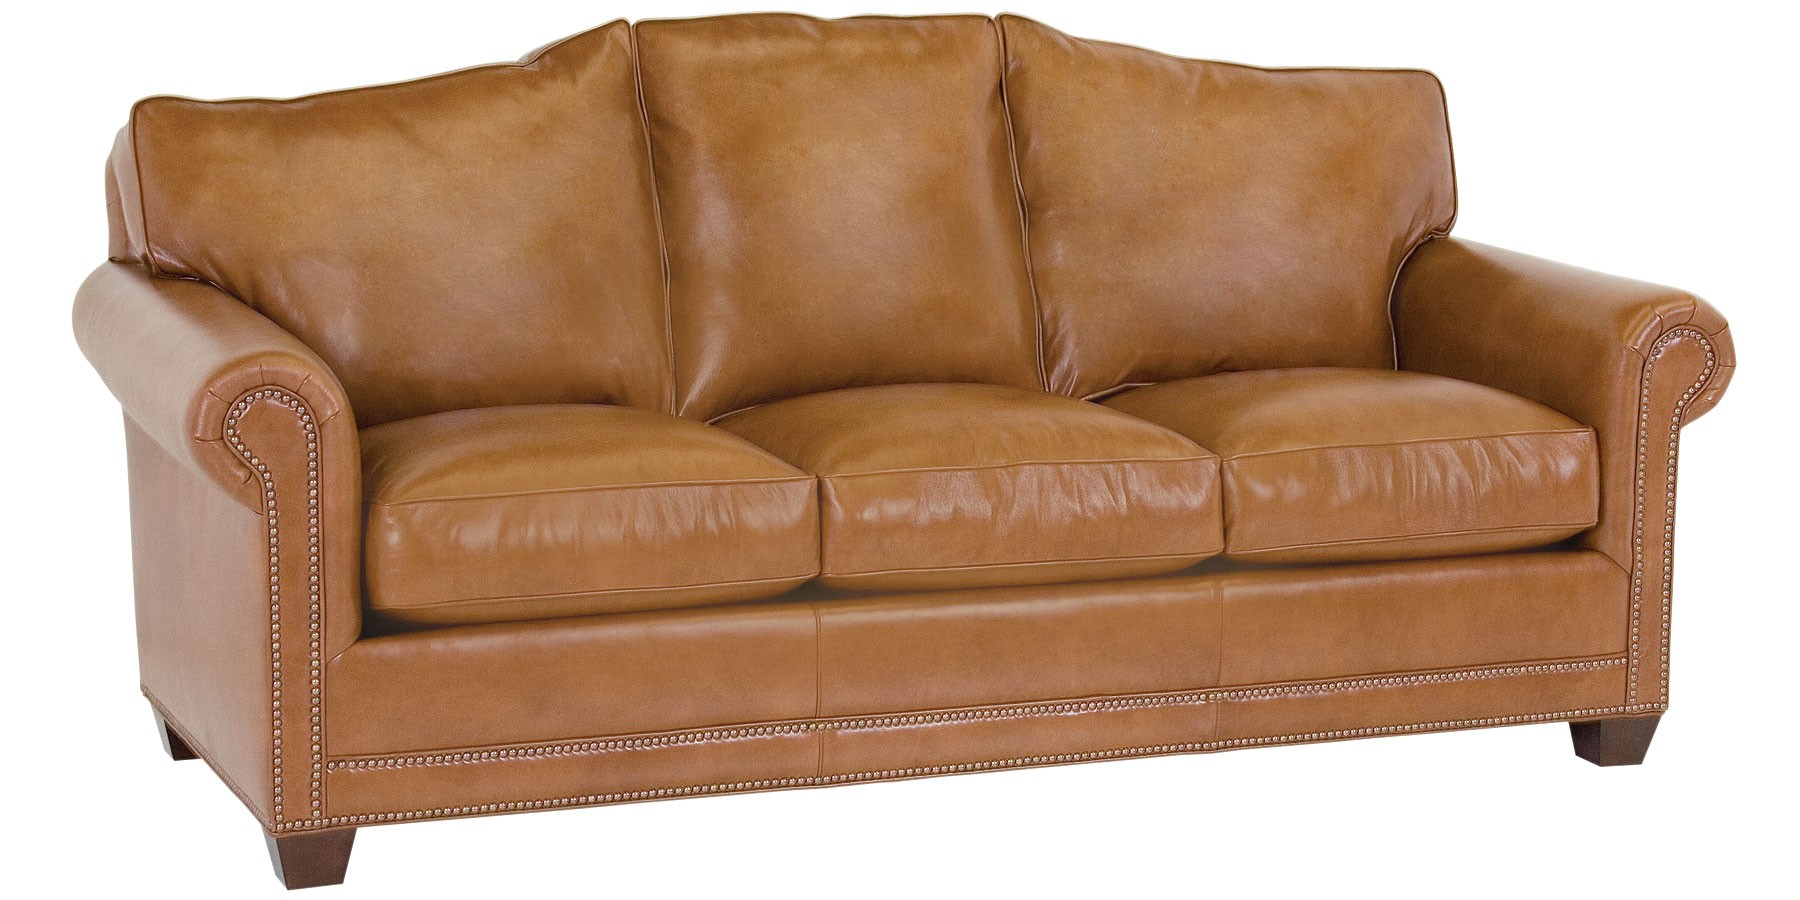 Leather camel back sofa with nailhead trim club furniture